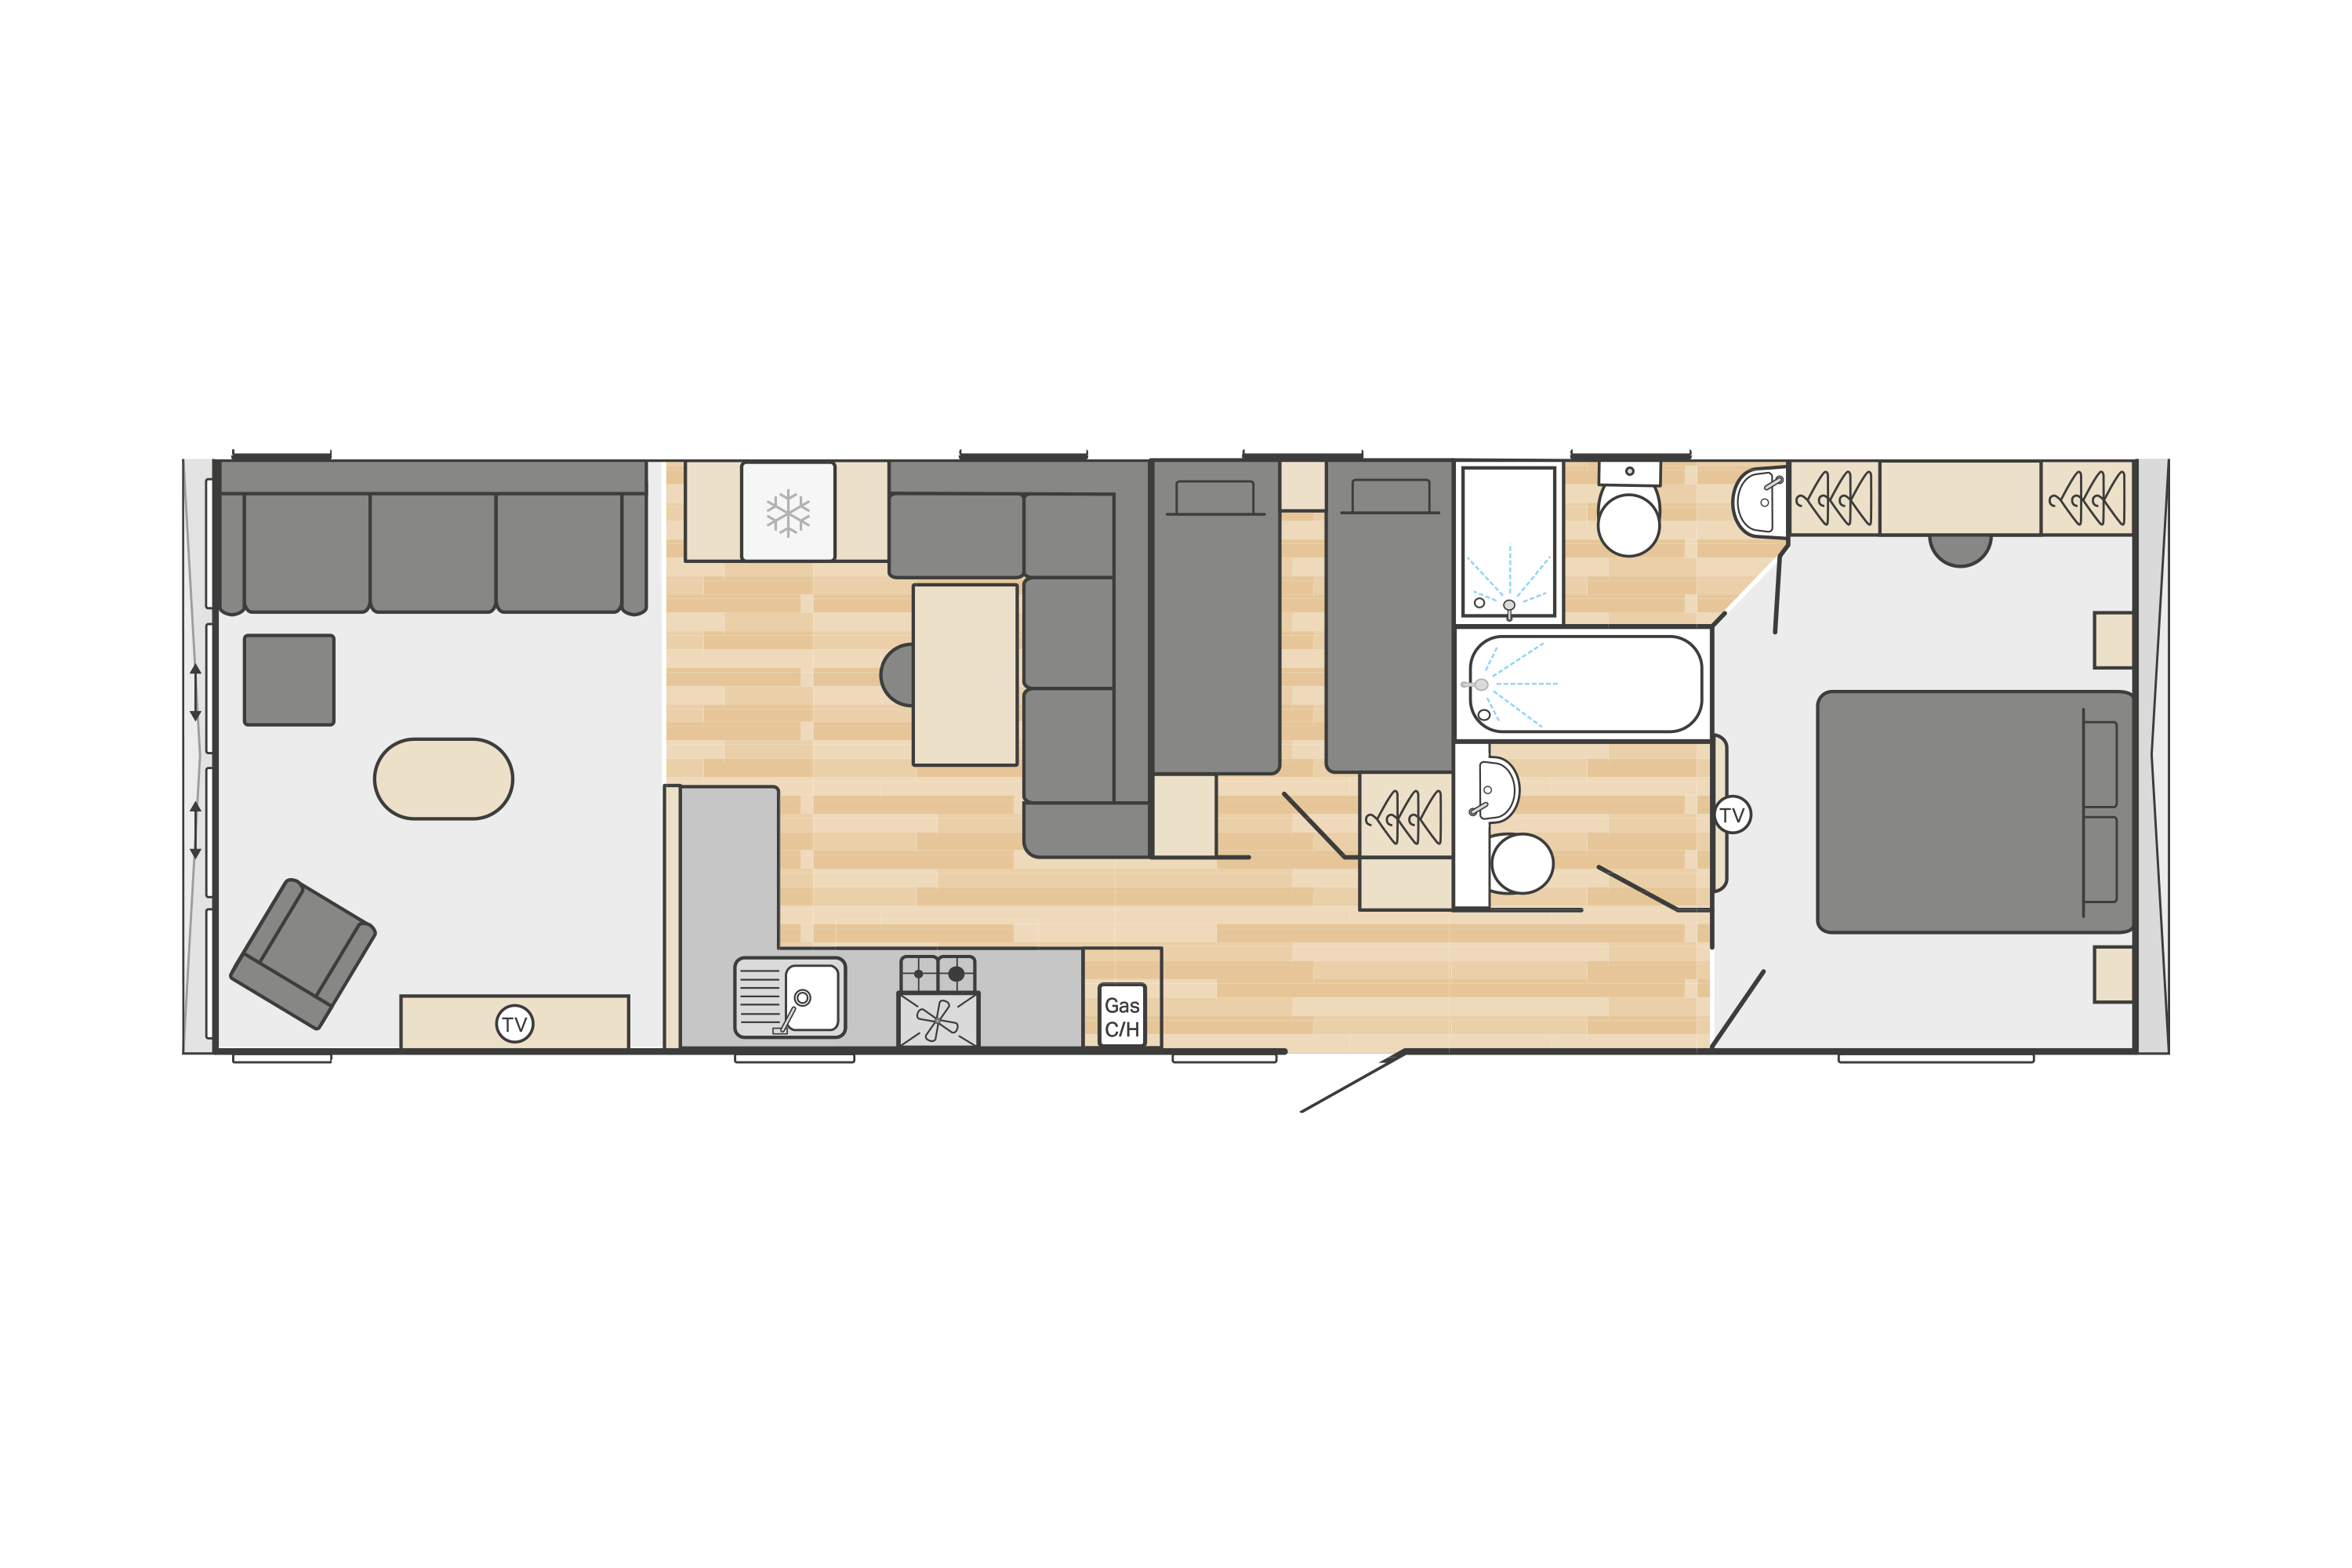 Moselle Lodge (Country) 40' x 13' - 2 Bedroom floorplan